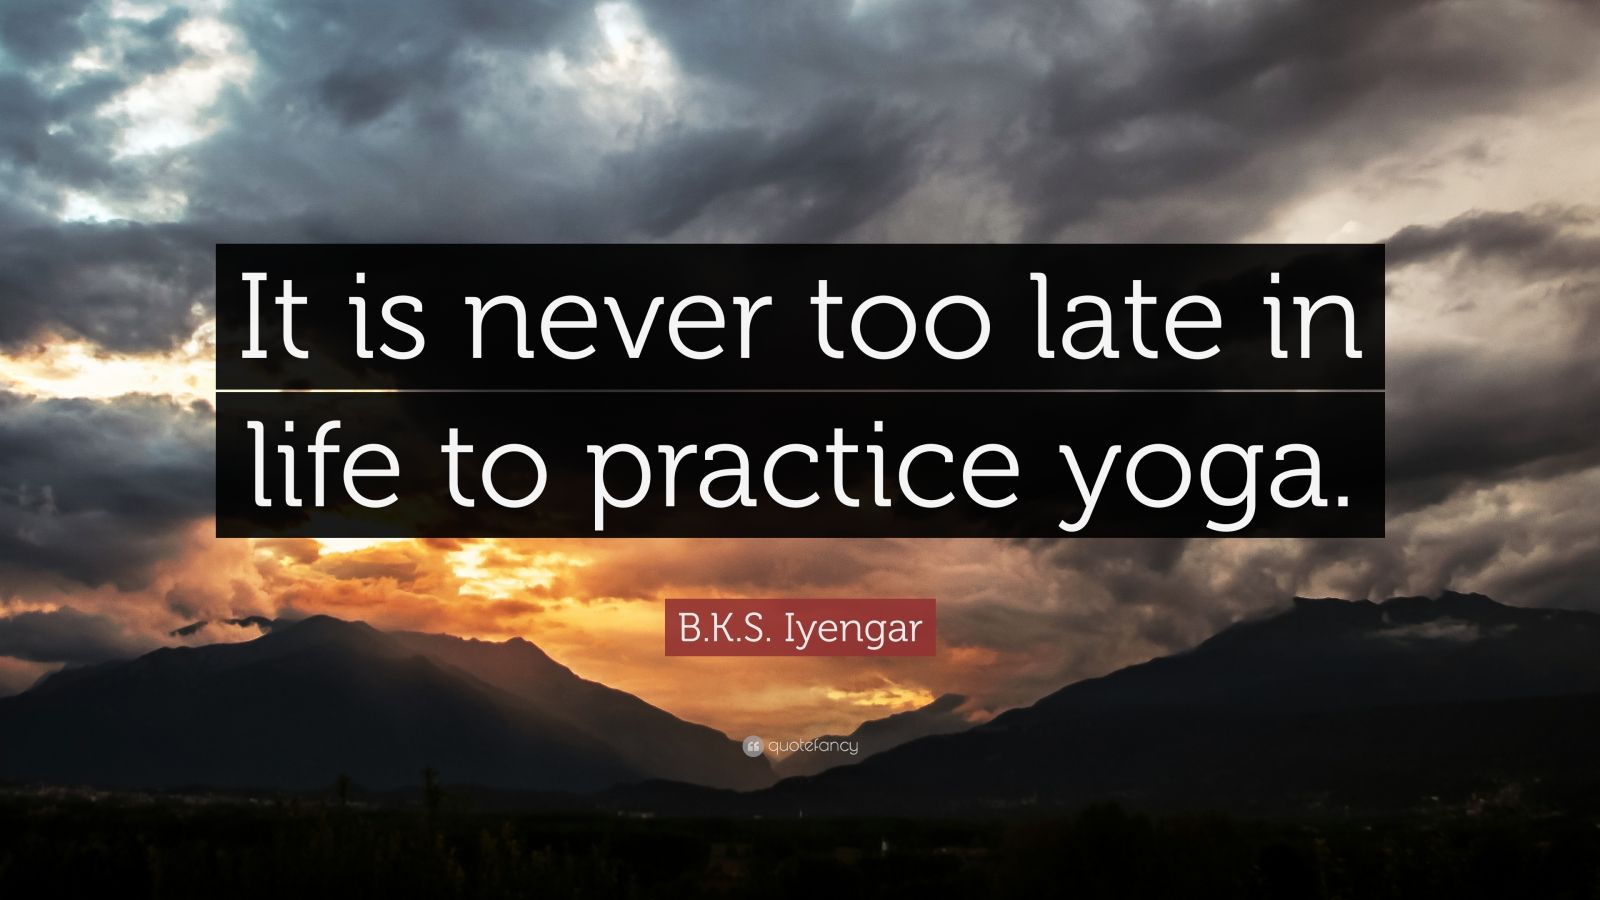 bks iyengar quotes light on life